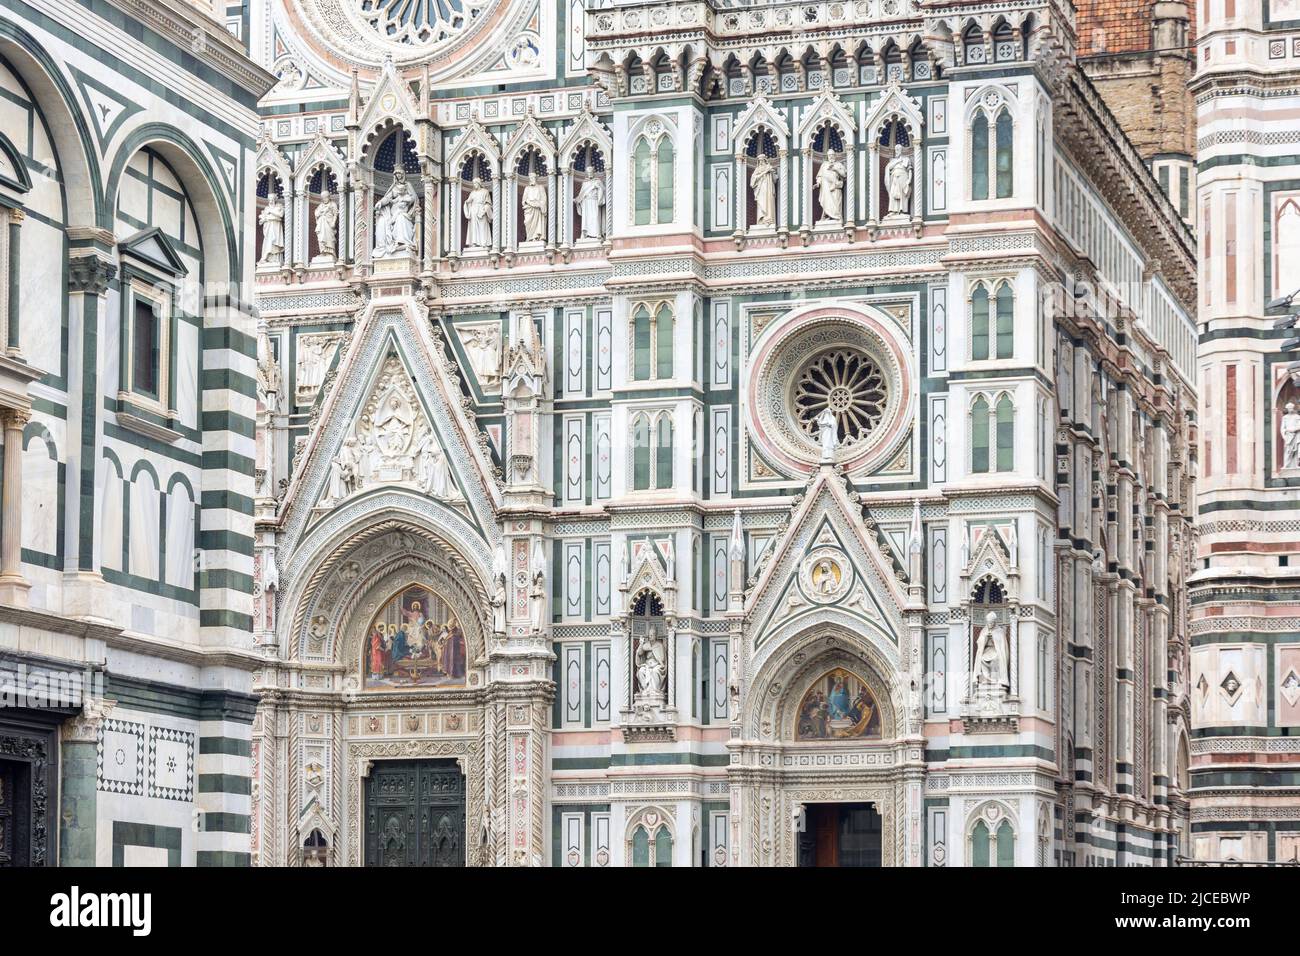 Entrance facade of Cattedrale di Santa Maria del Fiore cathedral (Duomo), Piazza del Duomo, Florence (Firenze), Tuscany Region, Italy Stock Photo